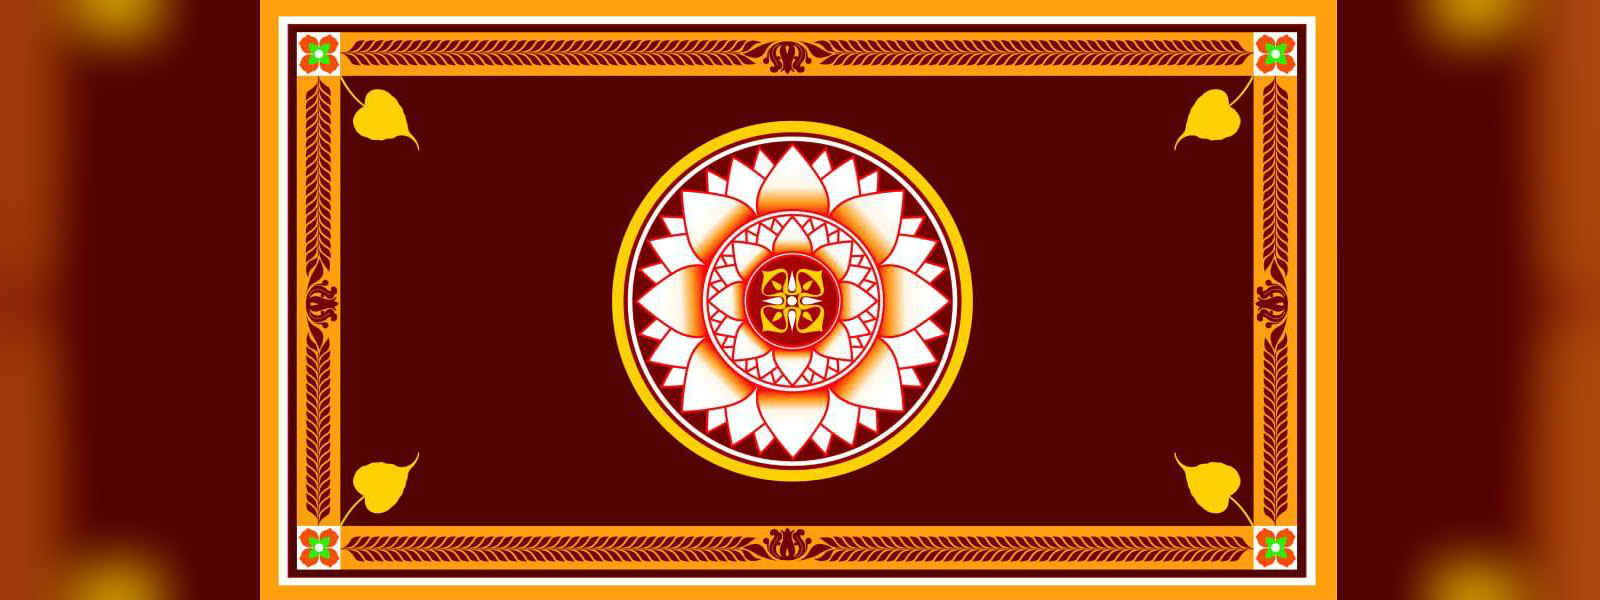 President Gotabaya Rajapaksa’s flag unveiled